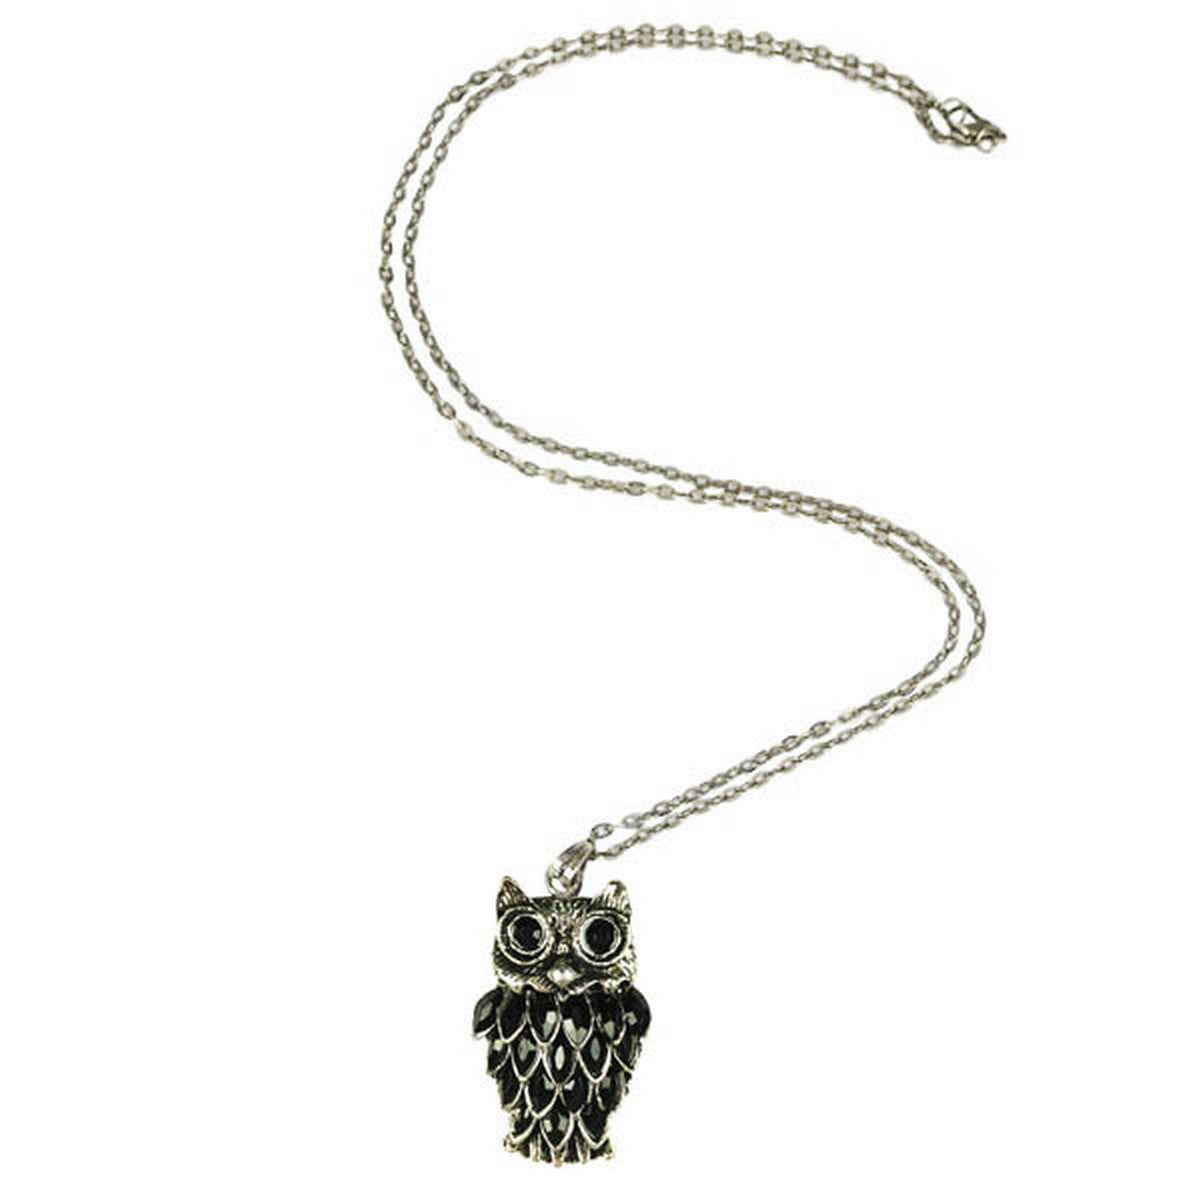 Vintage Black Crystal Owl Pendant Necklace